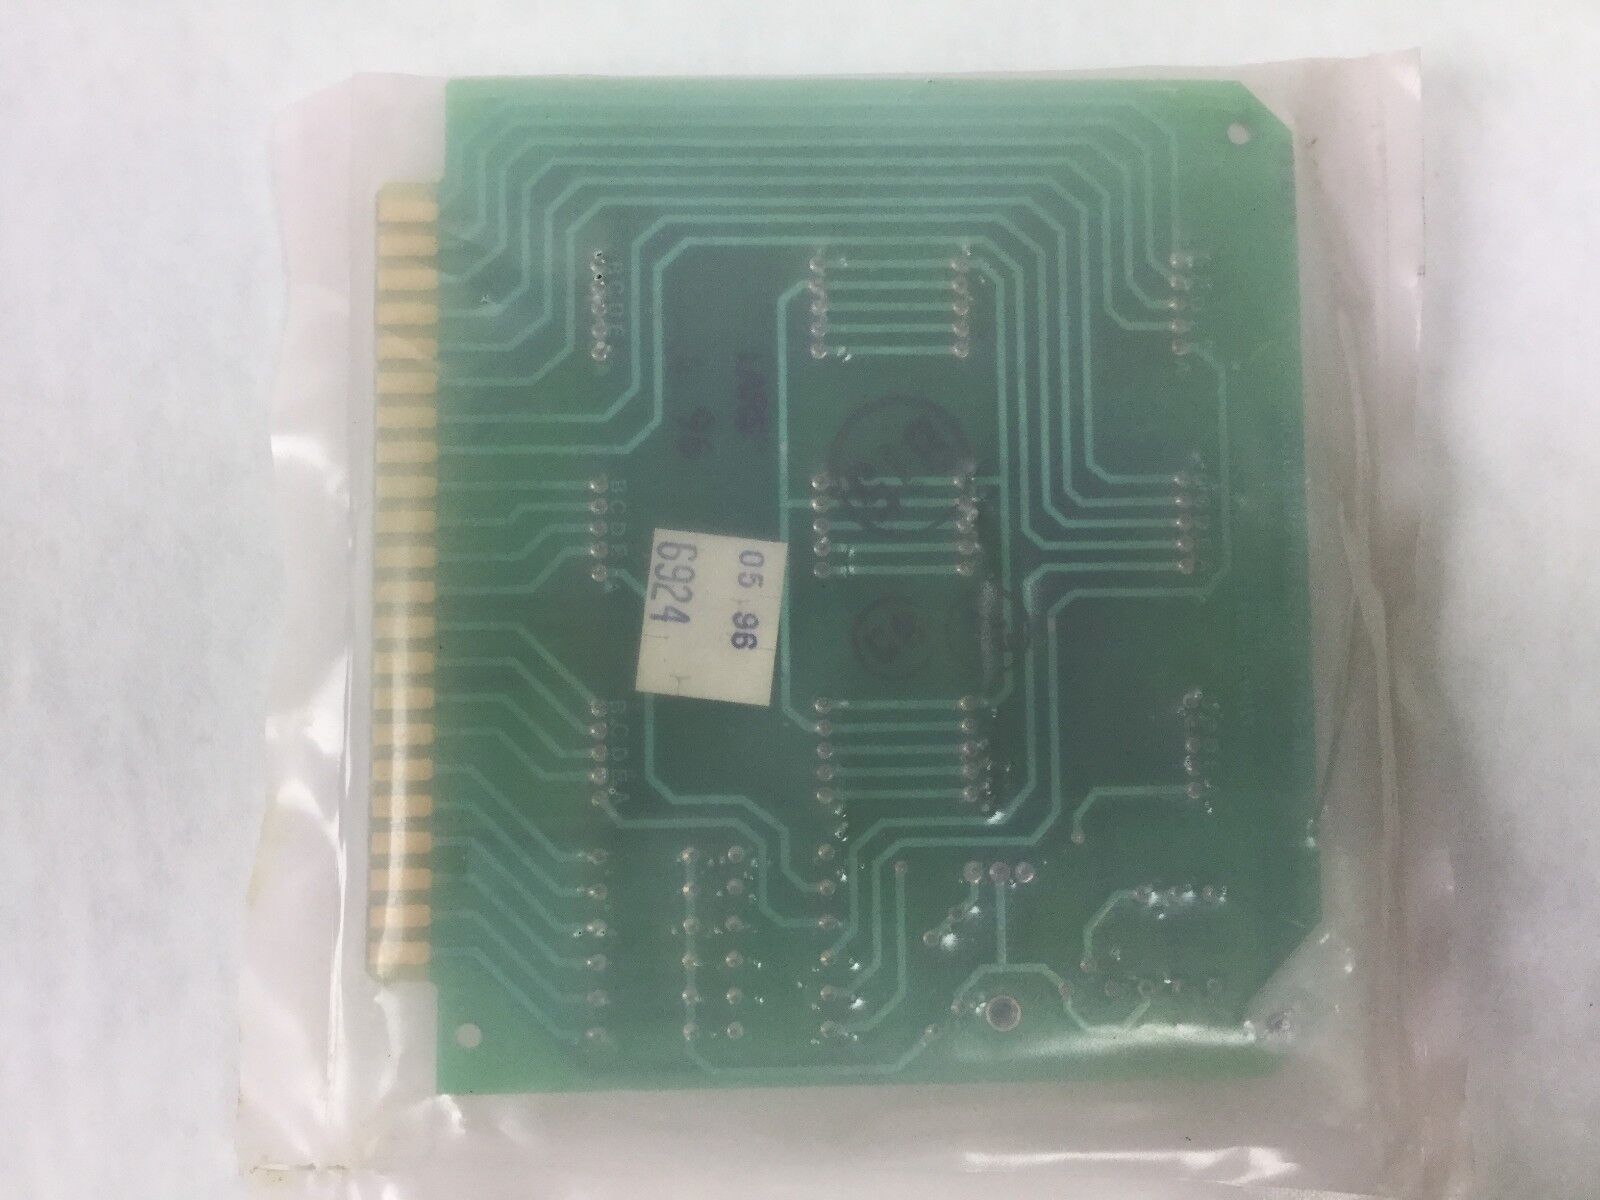 6 Channel Selector, MC000396/ MC000396 Rev E, Card, NEW in Sealed Bag